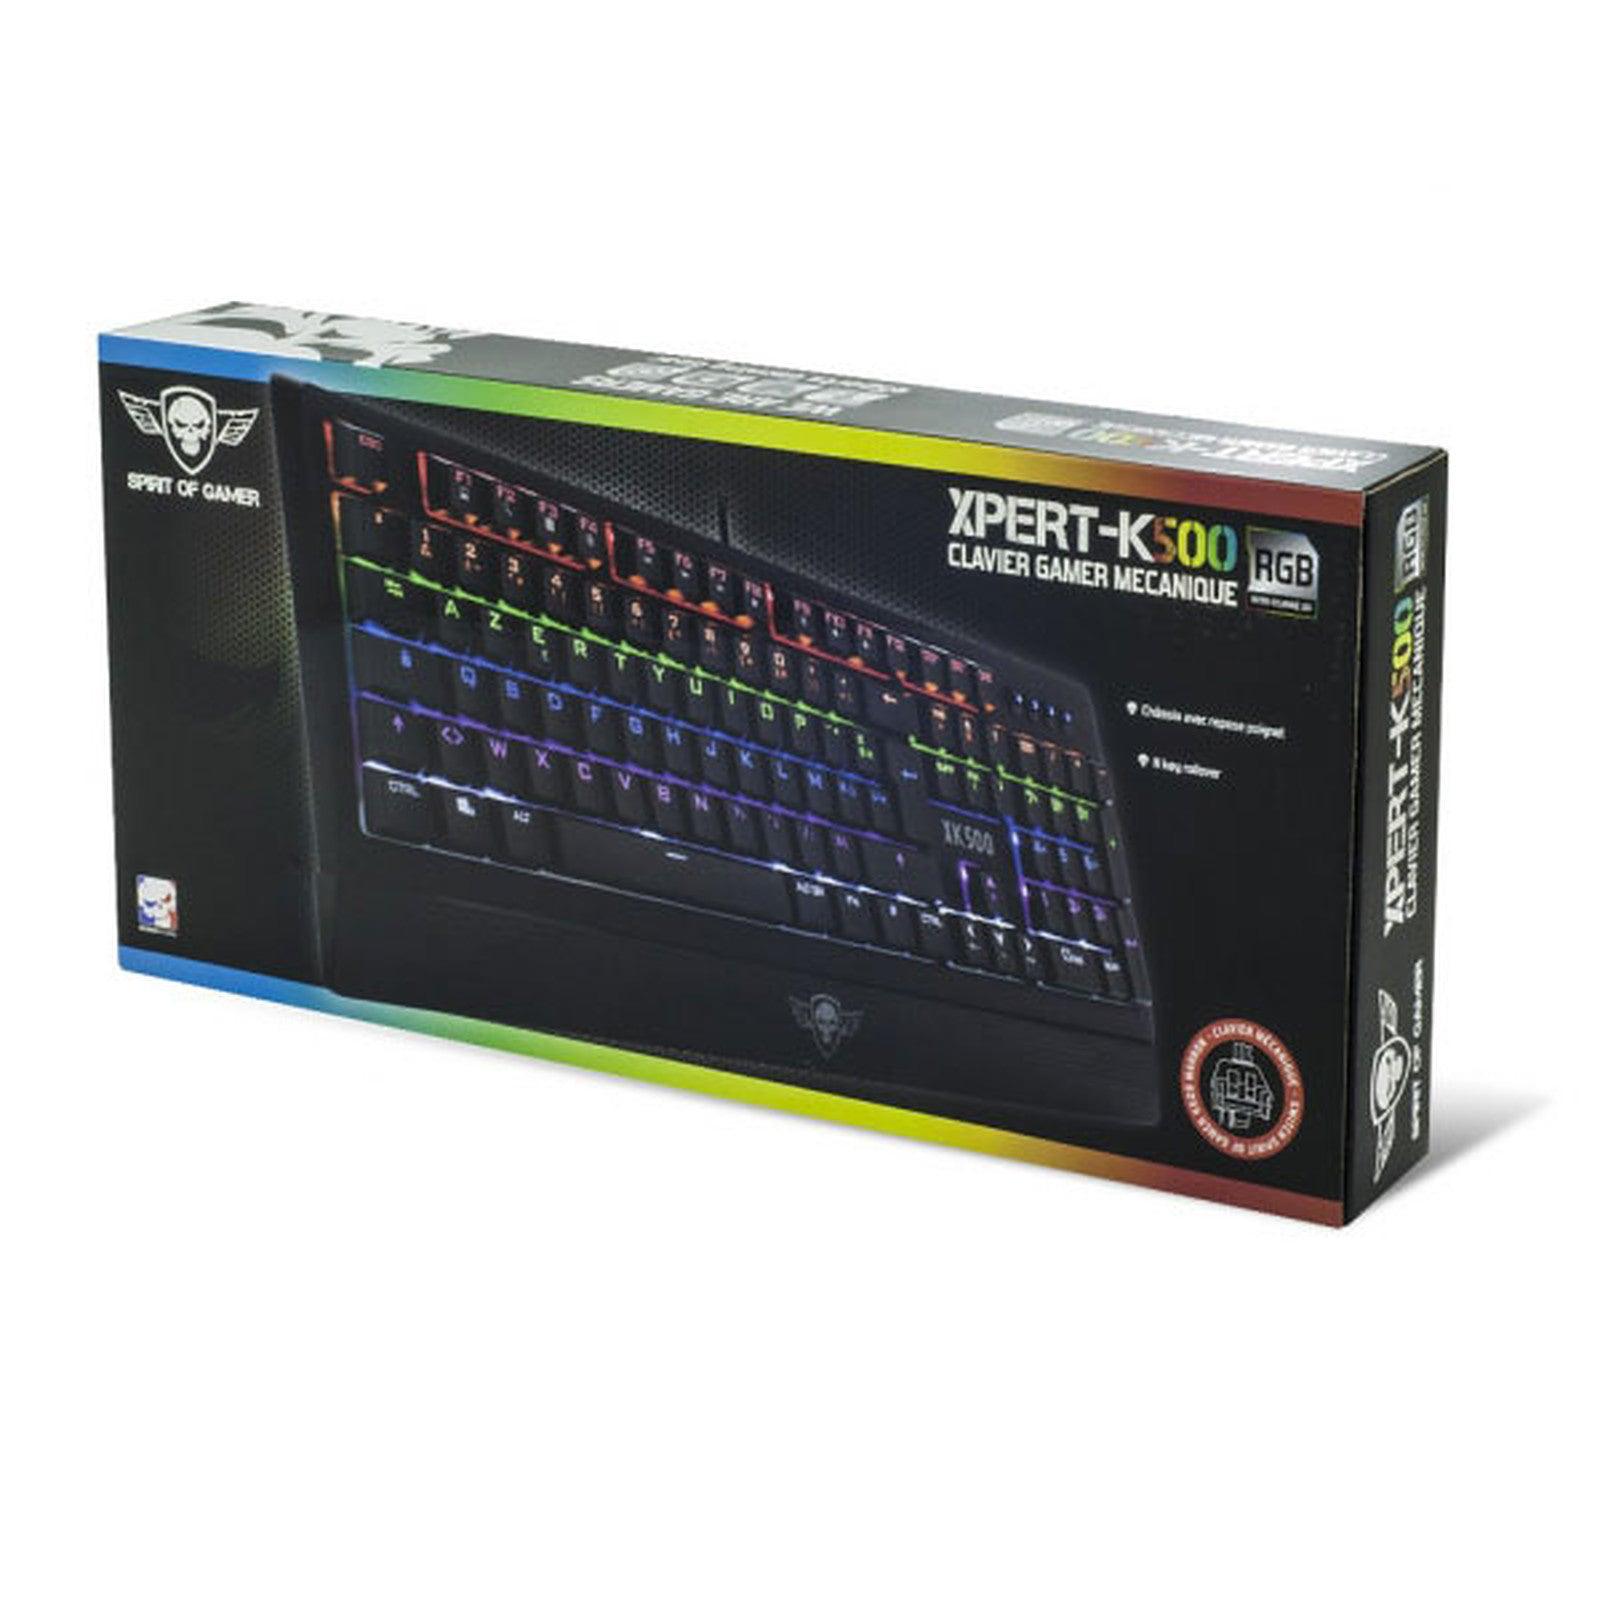 clavier gamer Spirit Of Gamer XPERT-K500 Prix pas cher au maroc - smartmarket.ma